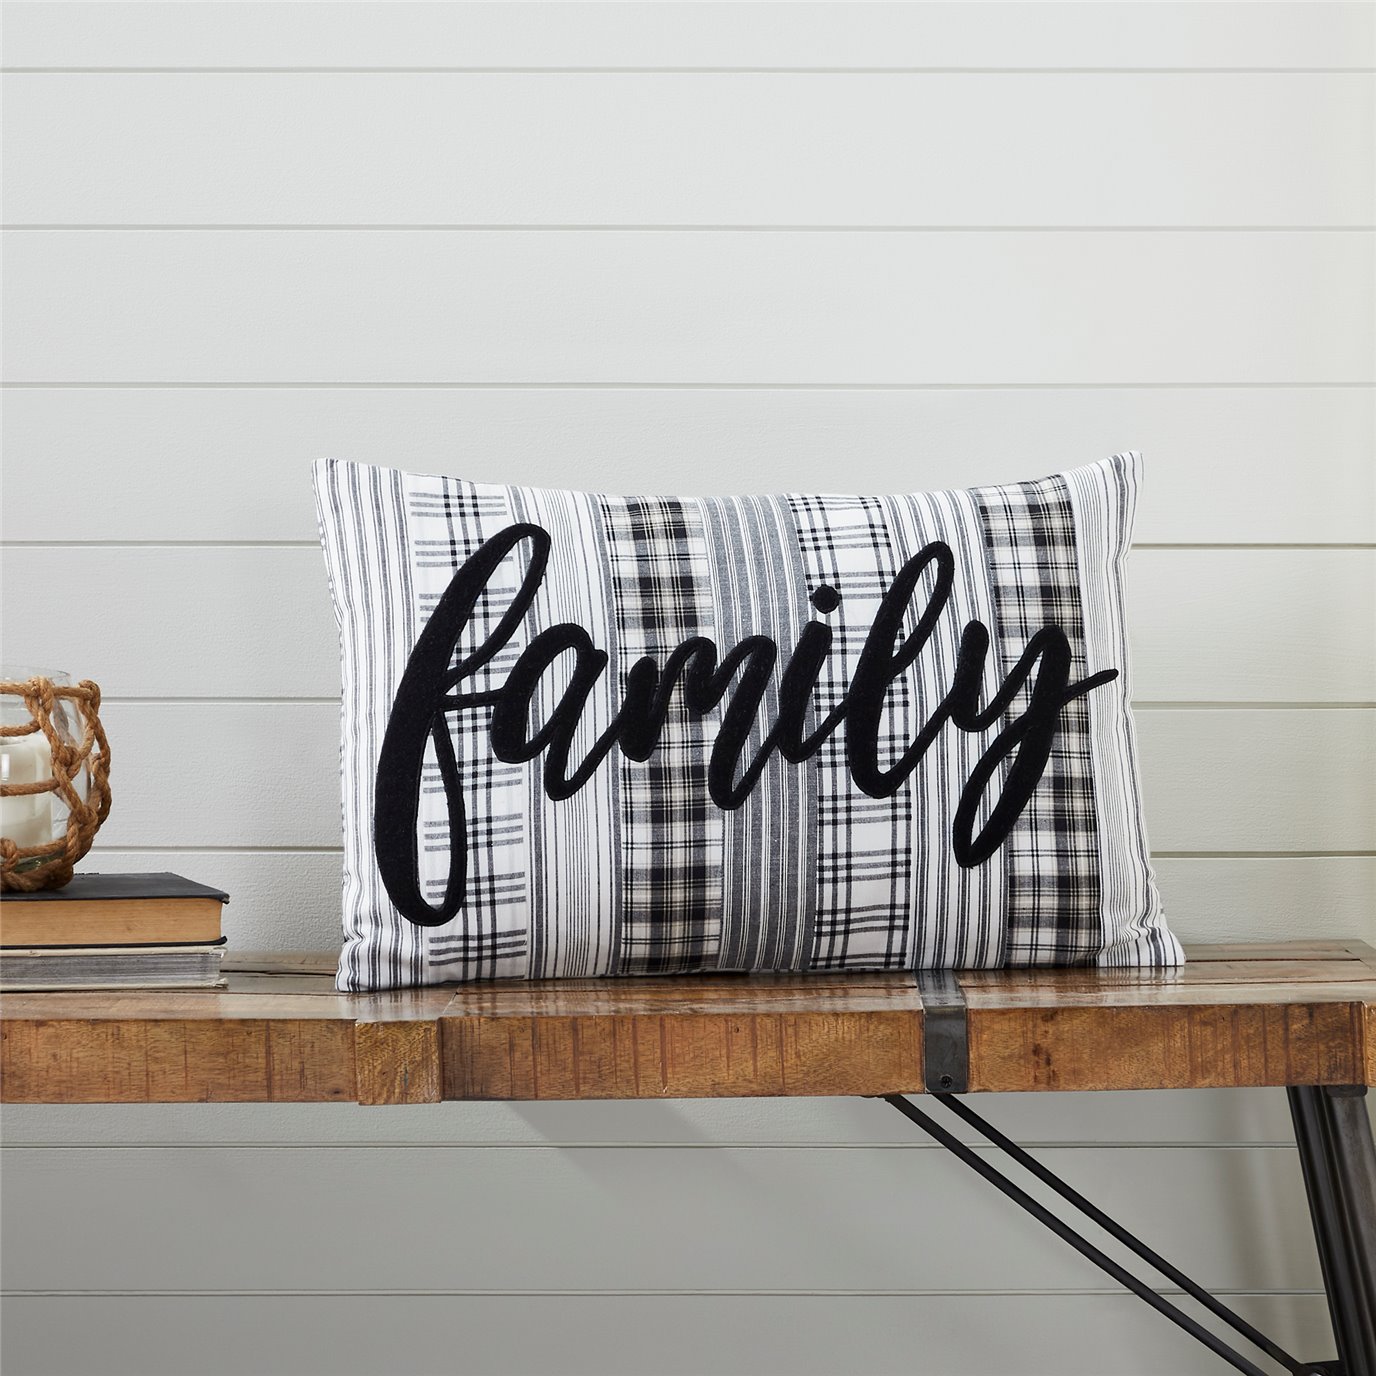 Sawyer Mill Black Family Pillow 14x22